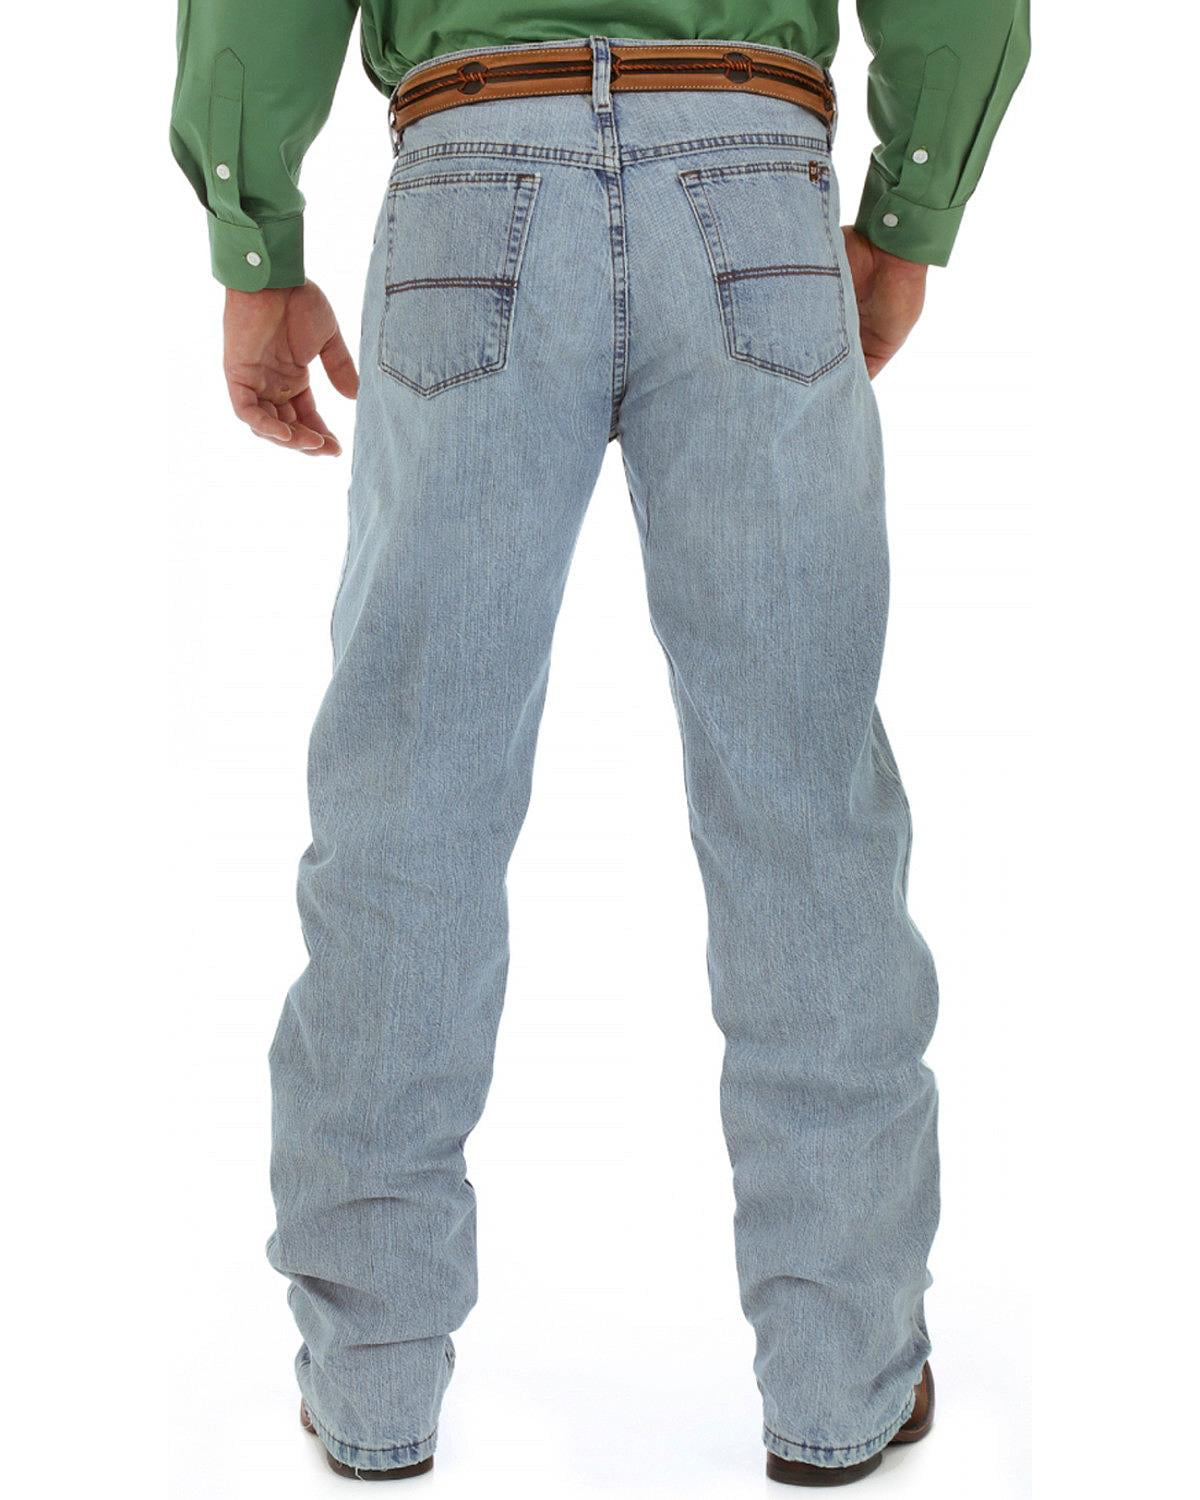 wrangler x20 jeans